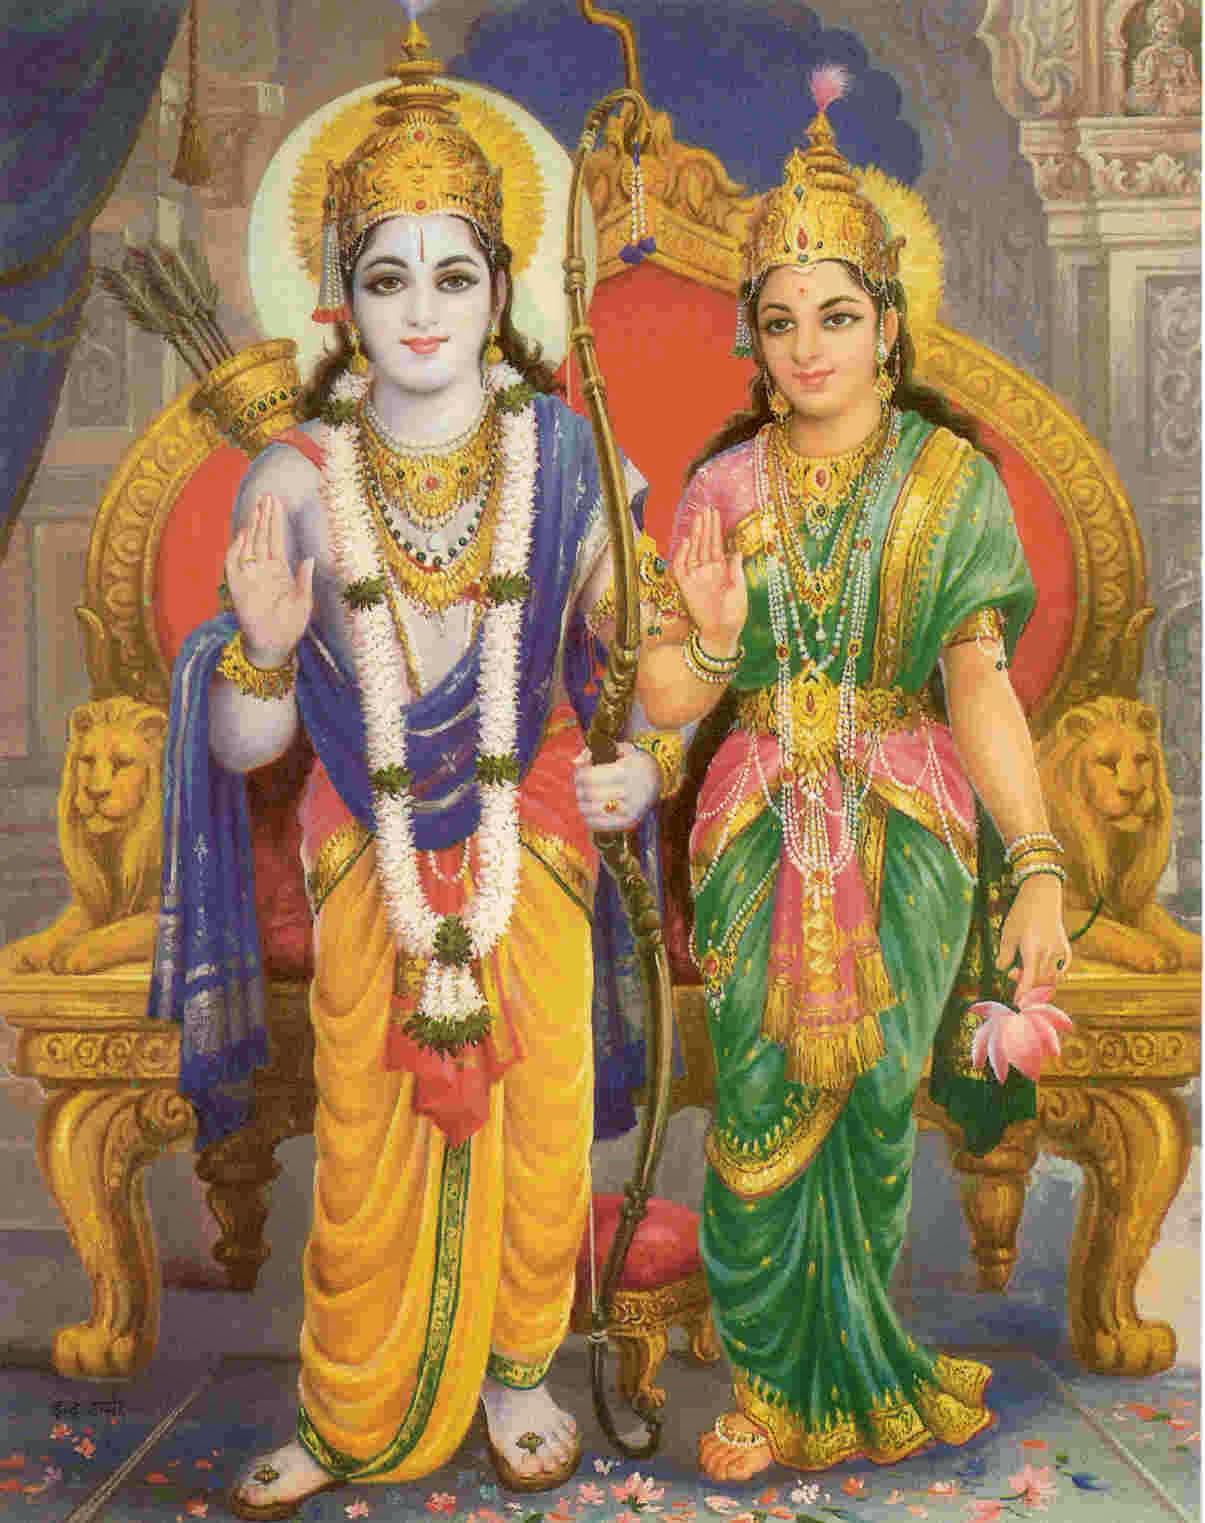 Shri Ram Sita Wallpaper HD, image collections of wallpaper